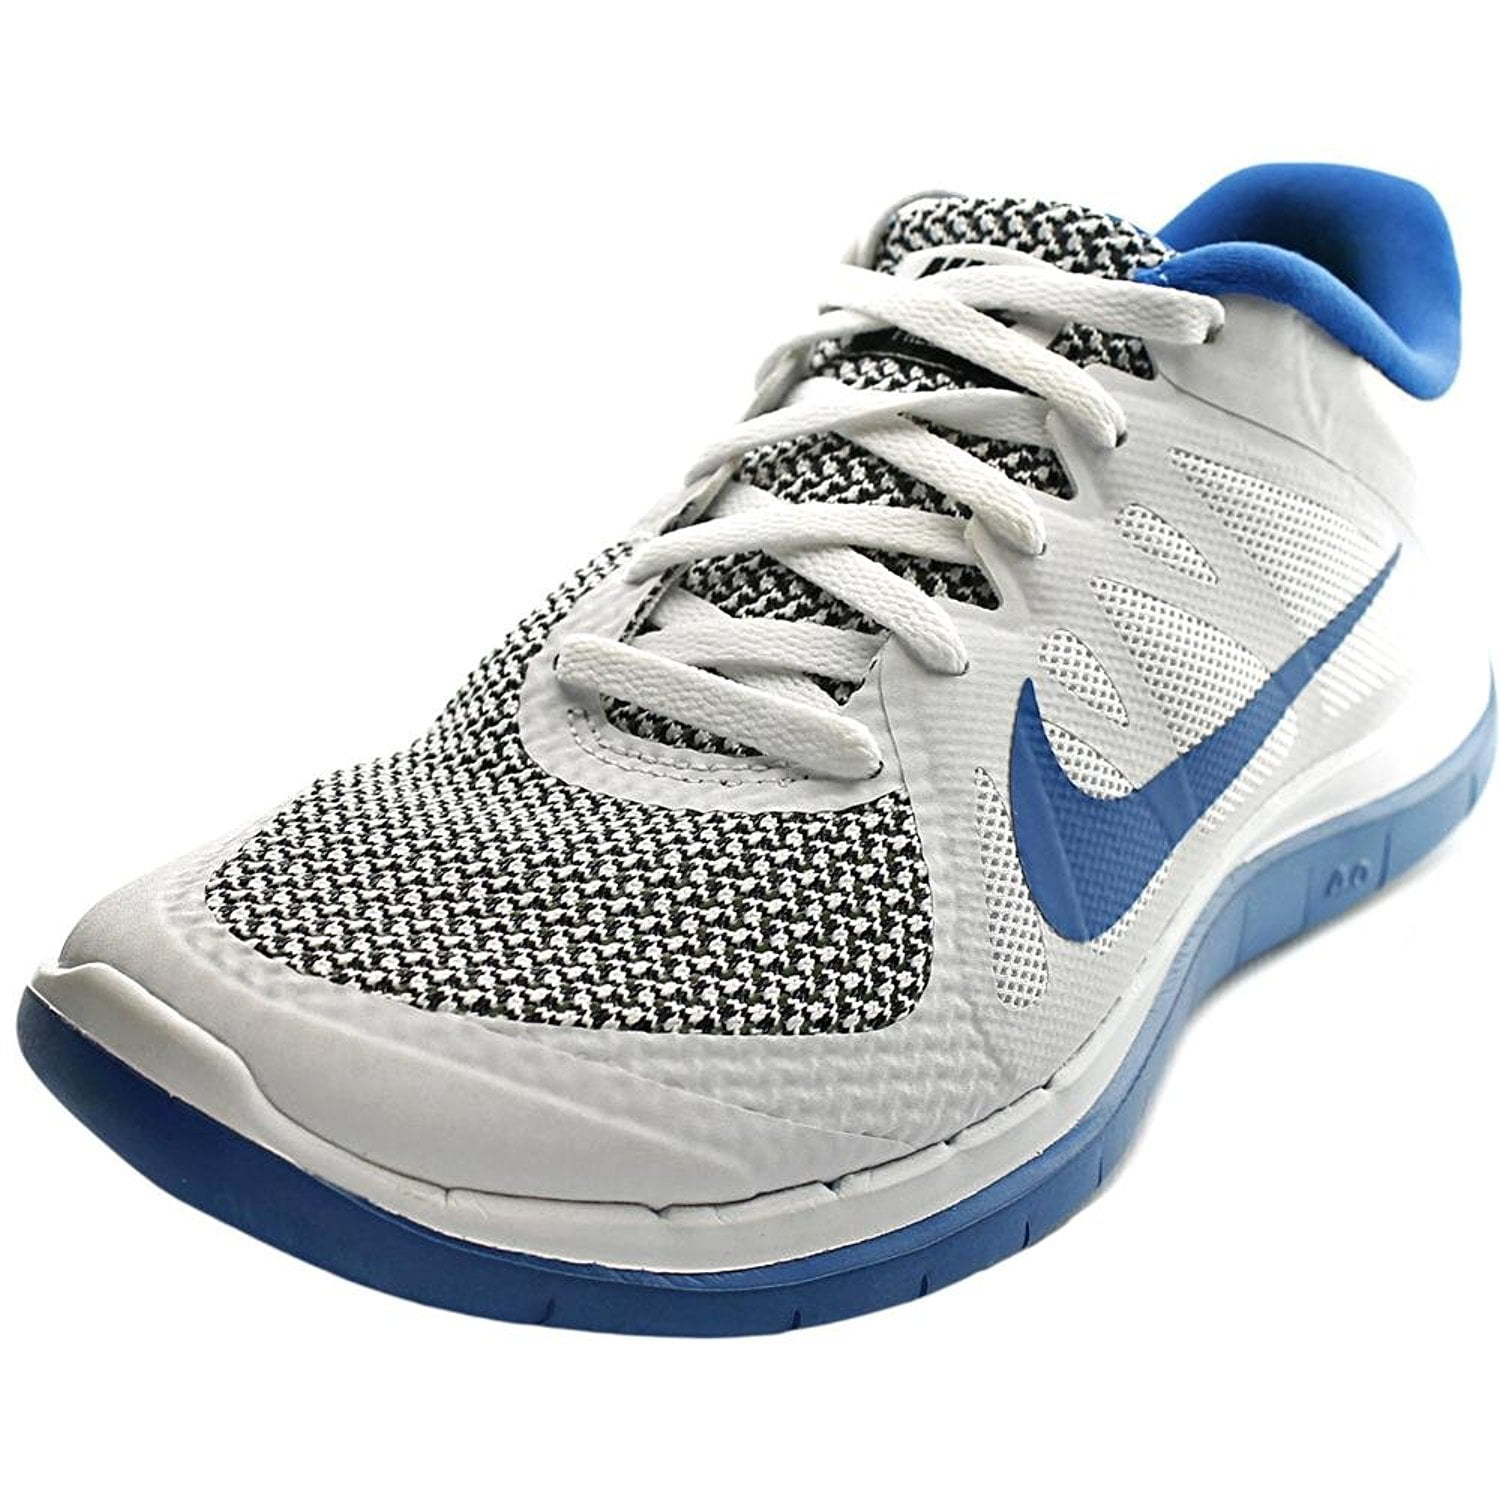 Nike Free 4.0 V4 Mens running shoes Model 642197 140 - Walmart.com